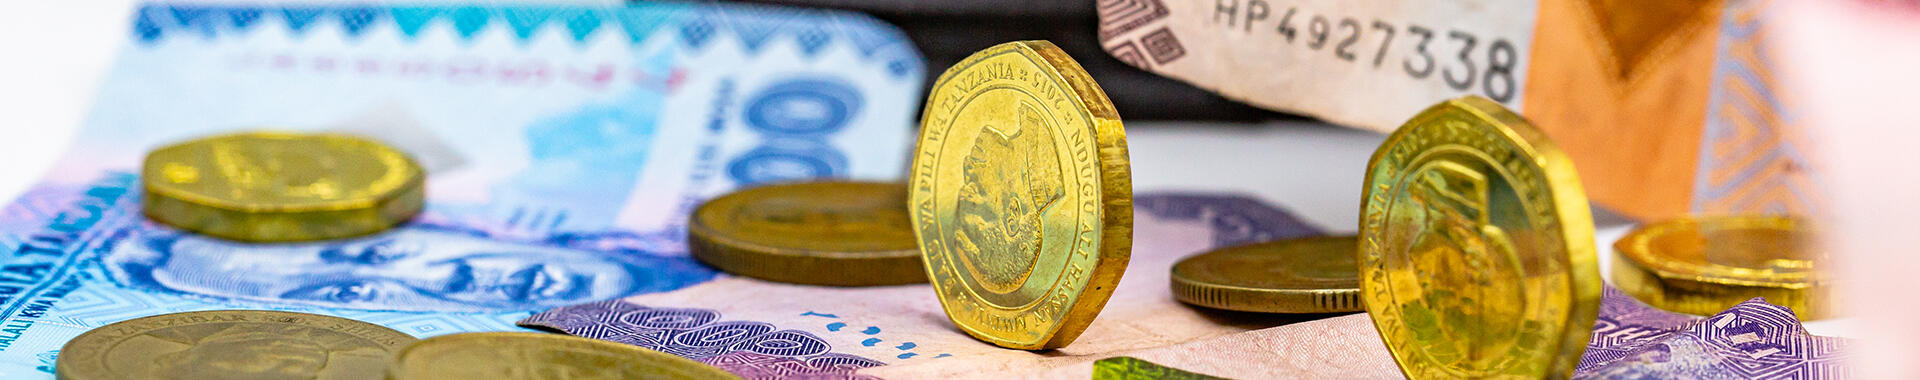 Tanzania currency. Image: Imani Nsamila / UNU-WIDER